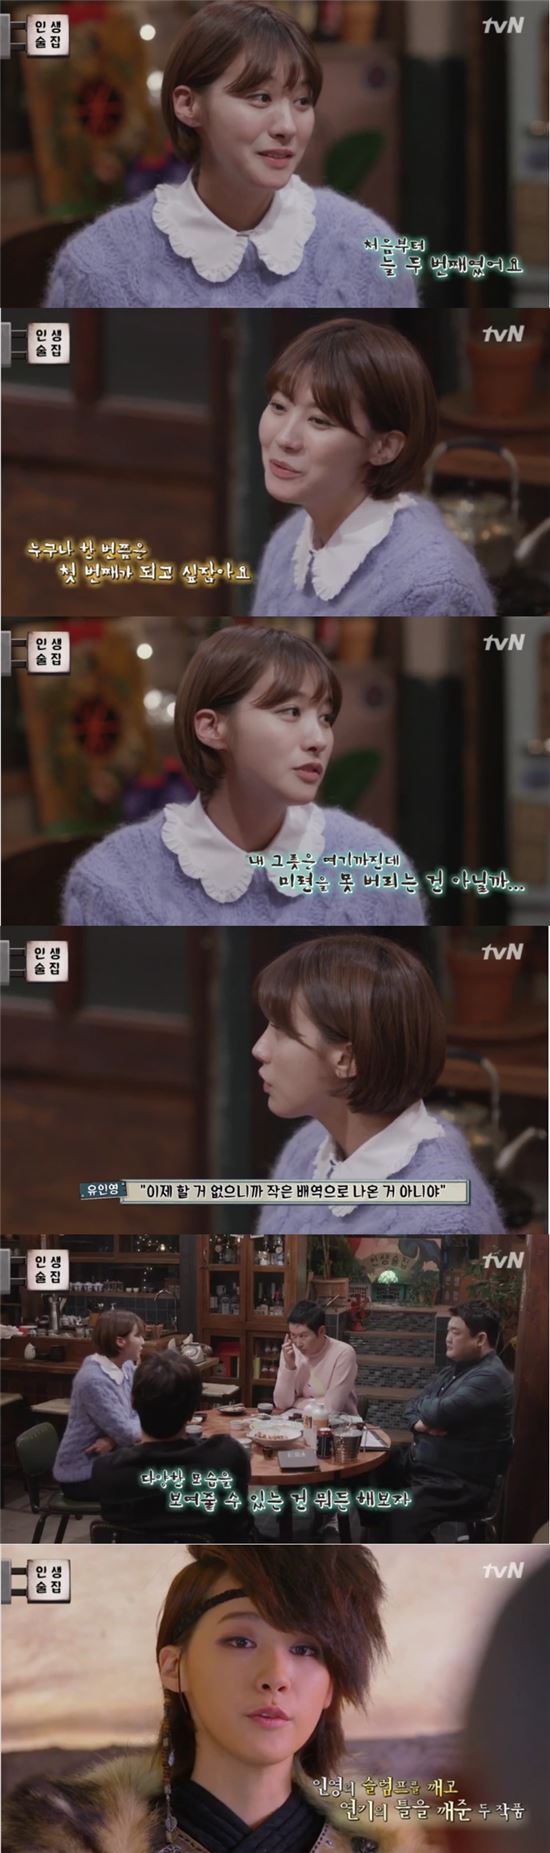 tvN '인생술집'에 출연한 배우 유인영이 13년 연기인생에서의 고민을 밝혔다./사진=tvN '인생술집' 캡처